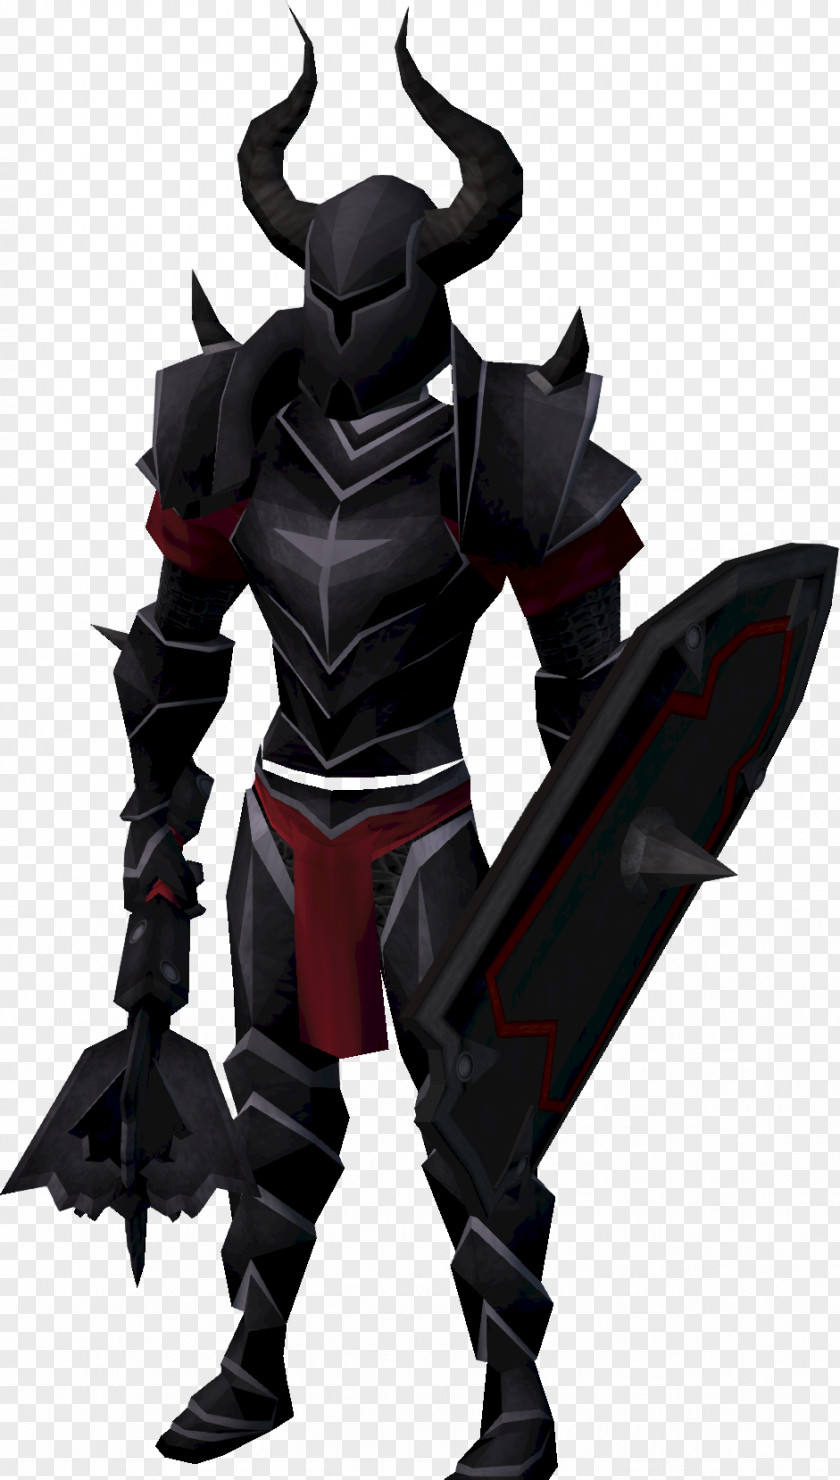 Double Agent Meme Old School RuneScape Armour Black Knight PNG